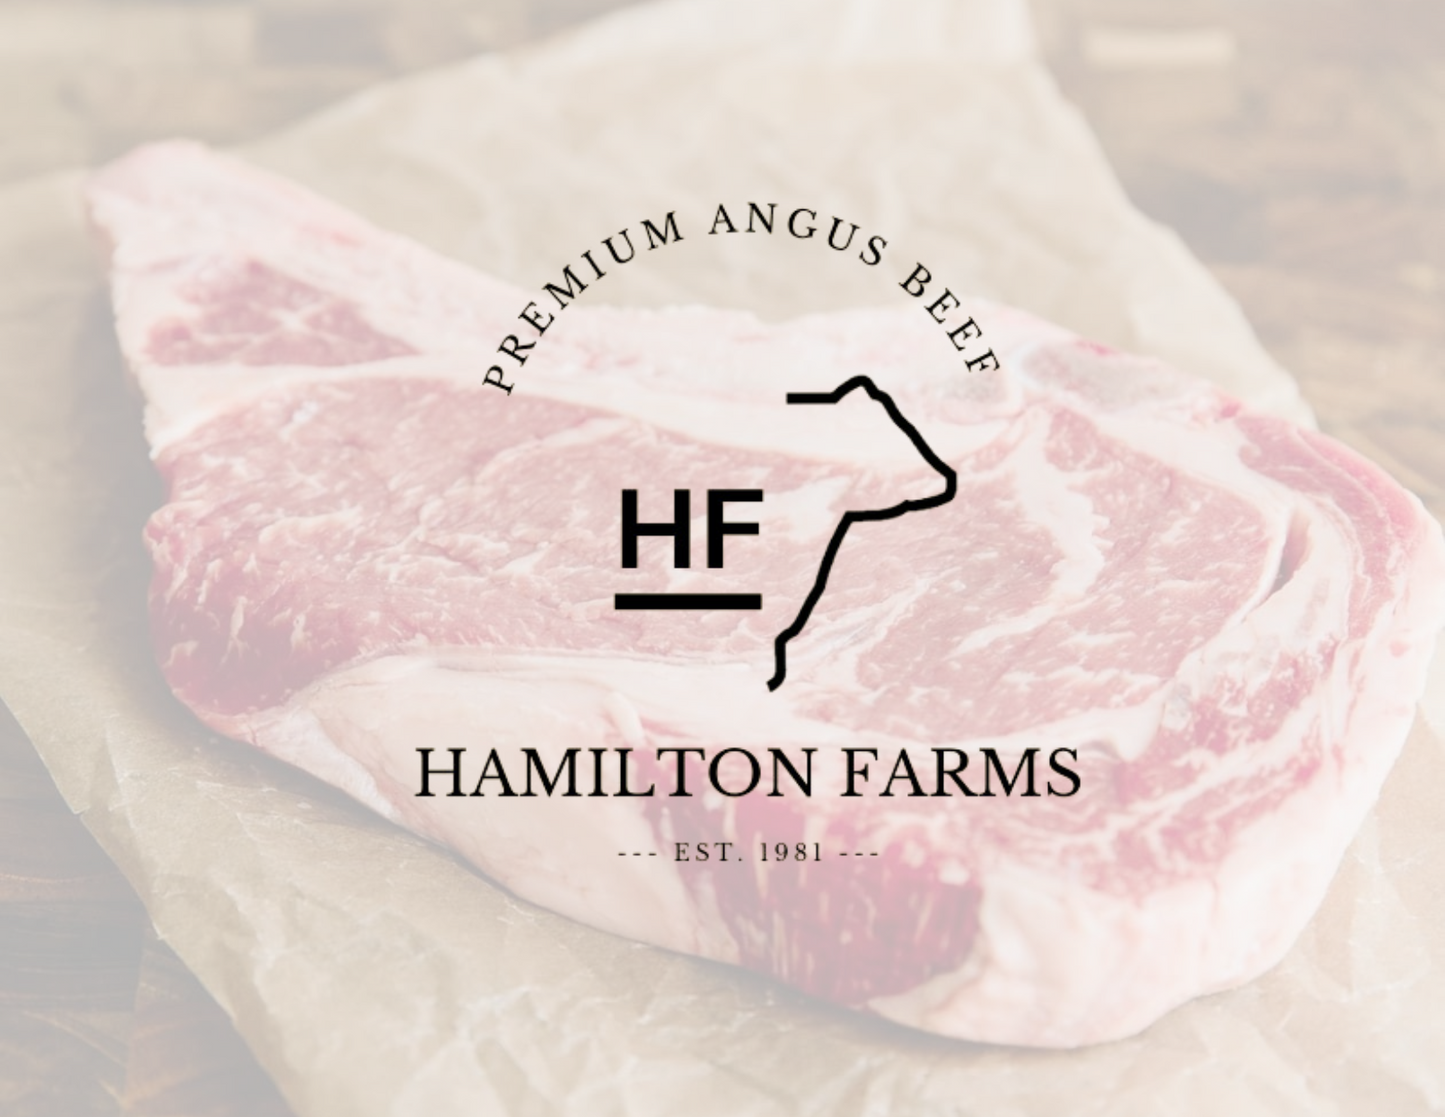 HF Premium Angus Beef Online Gift Card